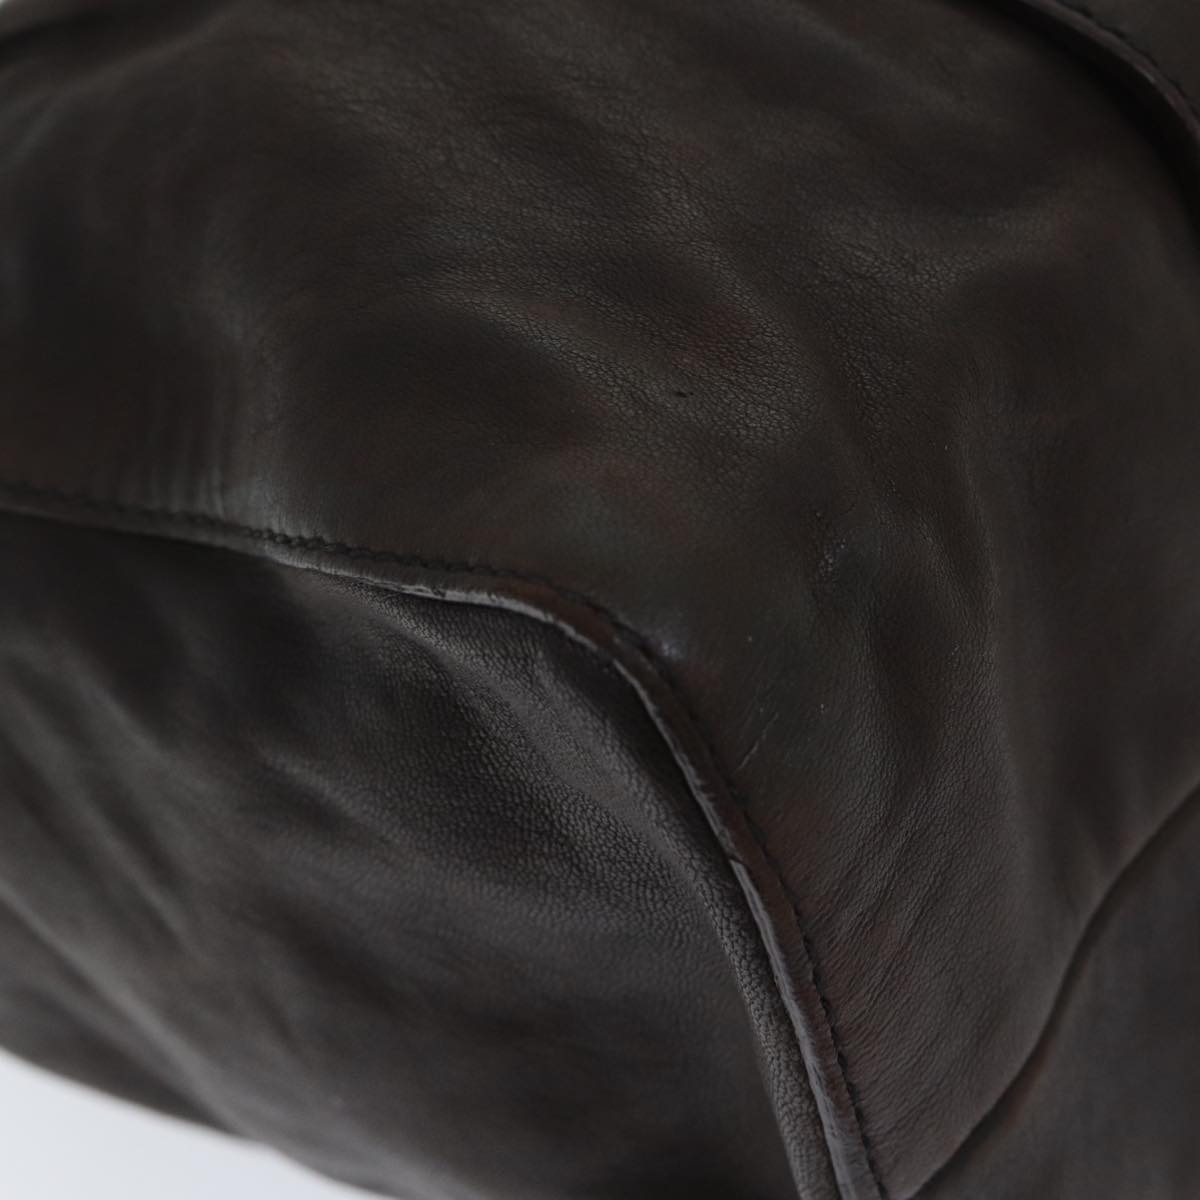 Miu Miu Hand Bag Leather Brown Auth yk11472